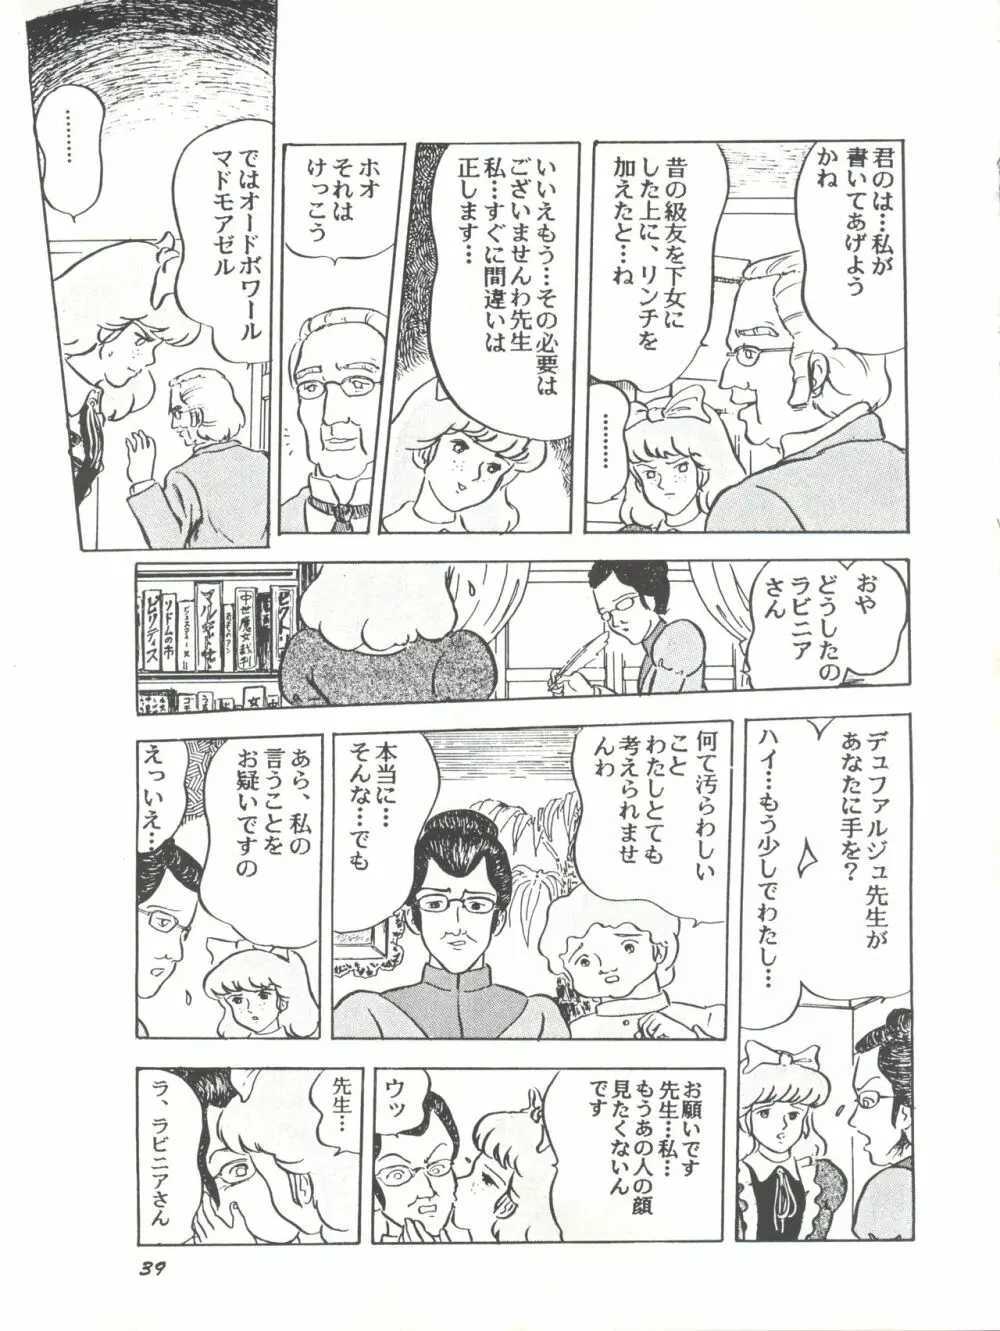 Paろでぃっく2 改訂版 - page39